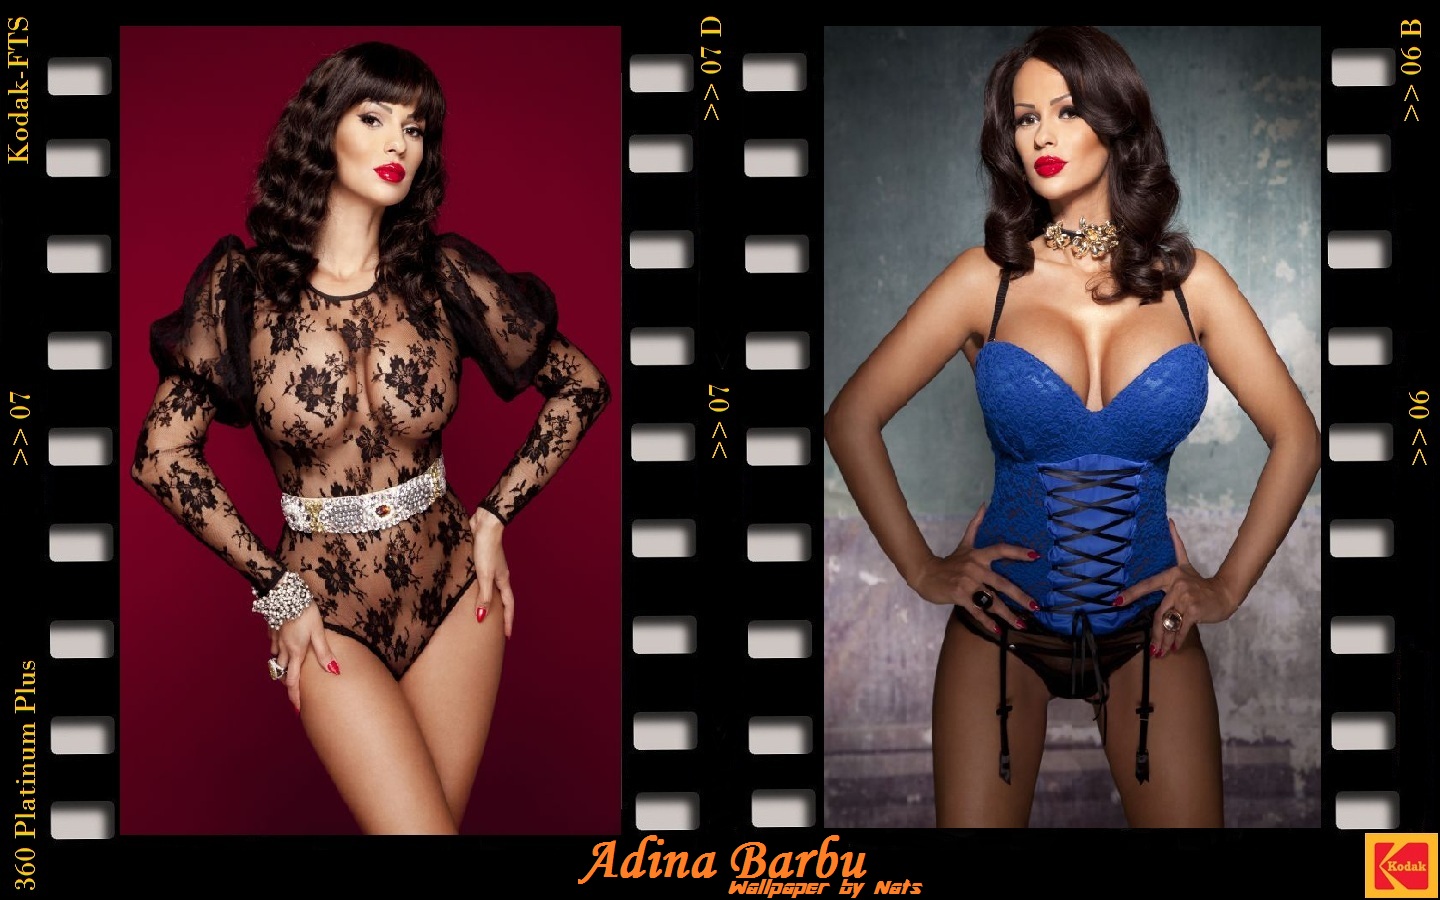 Download full size Adina Barbu wallpaper / Celebrities Female / 1440x900